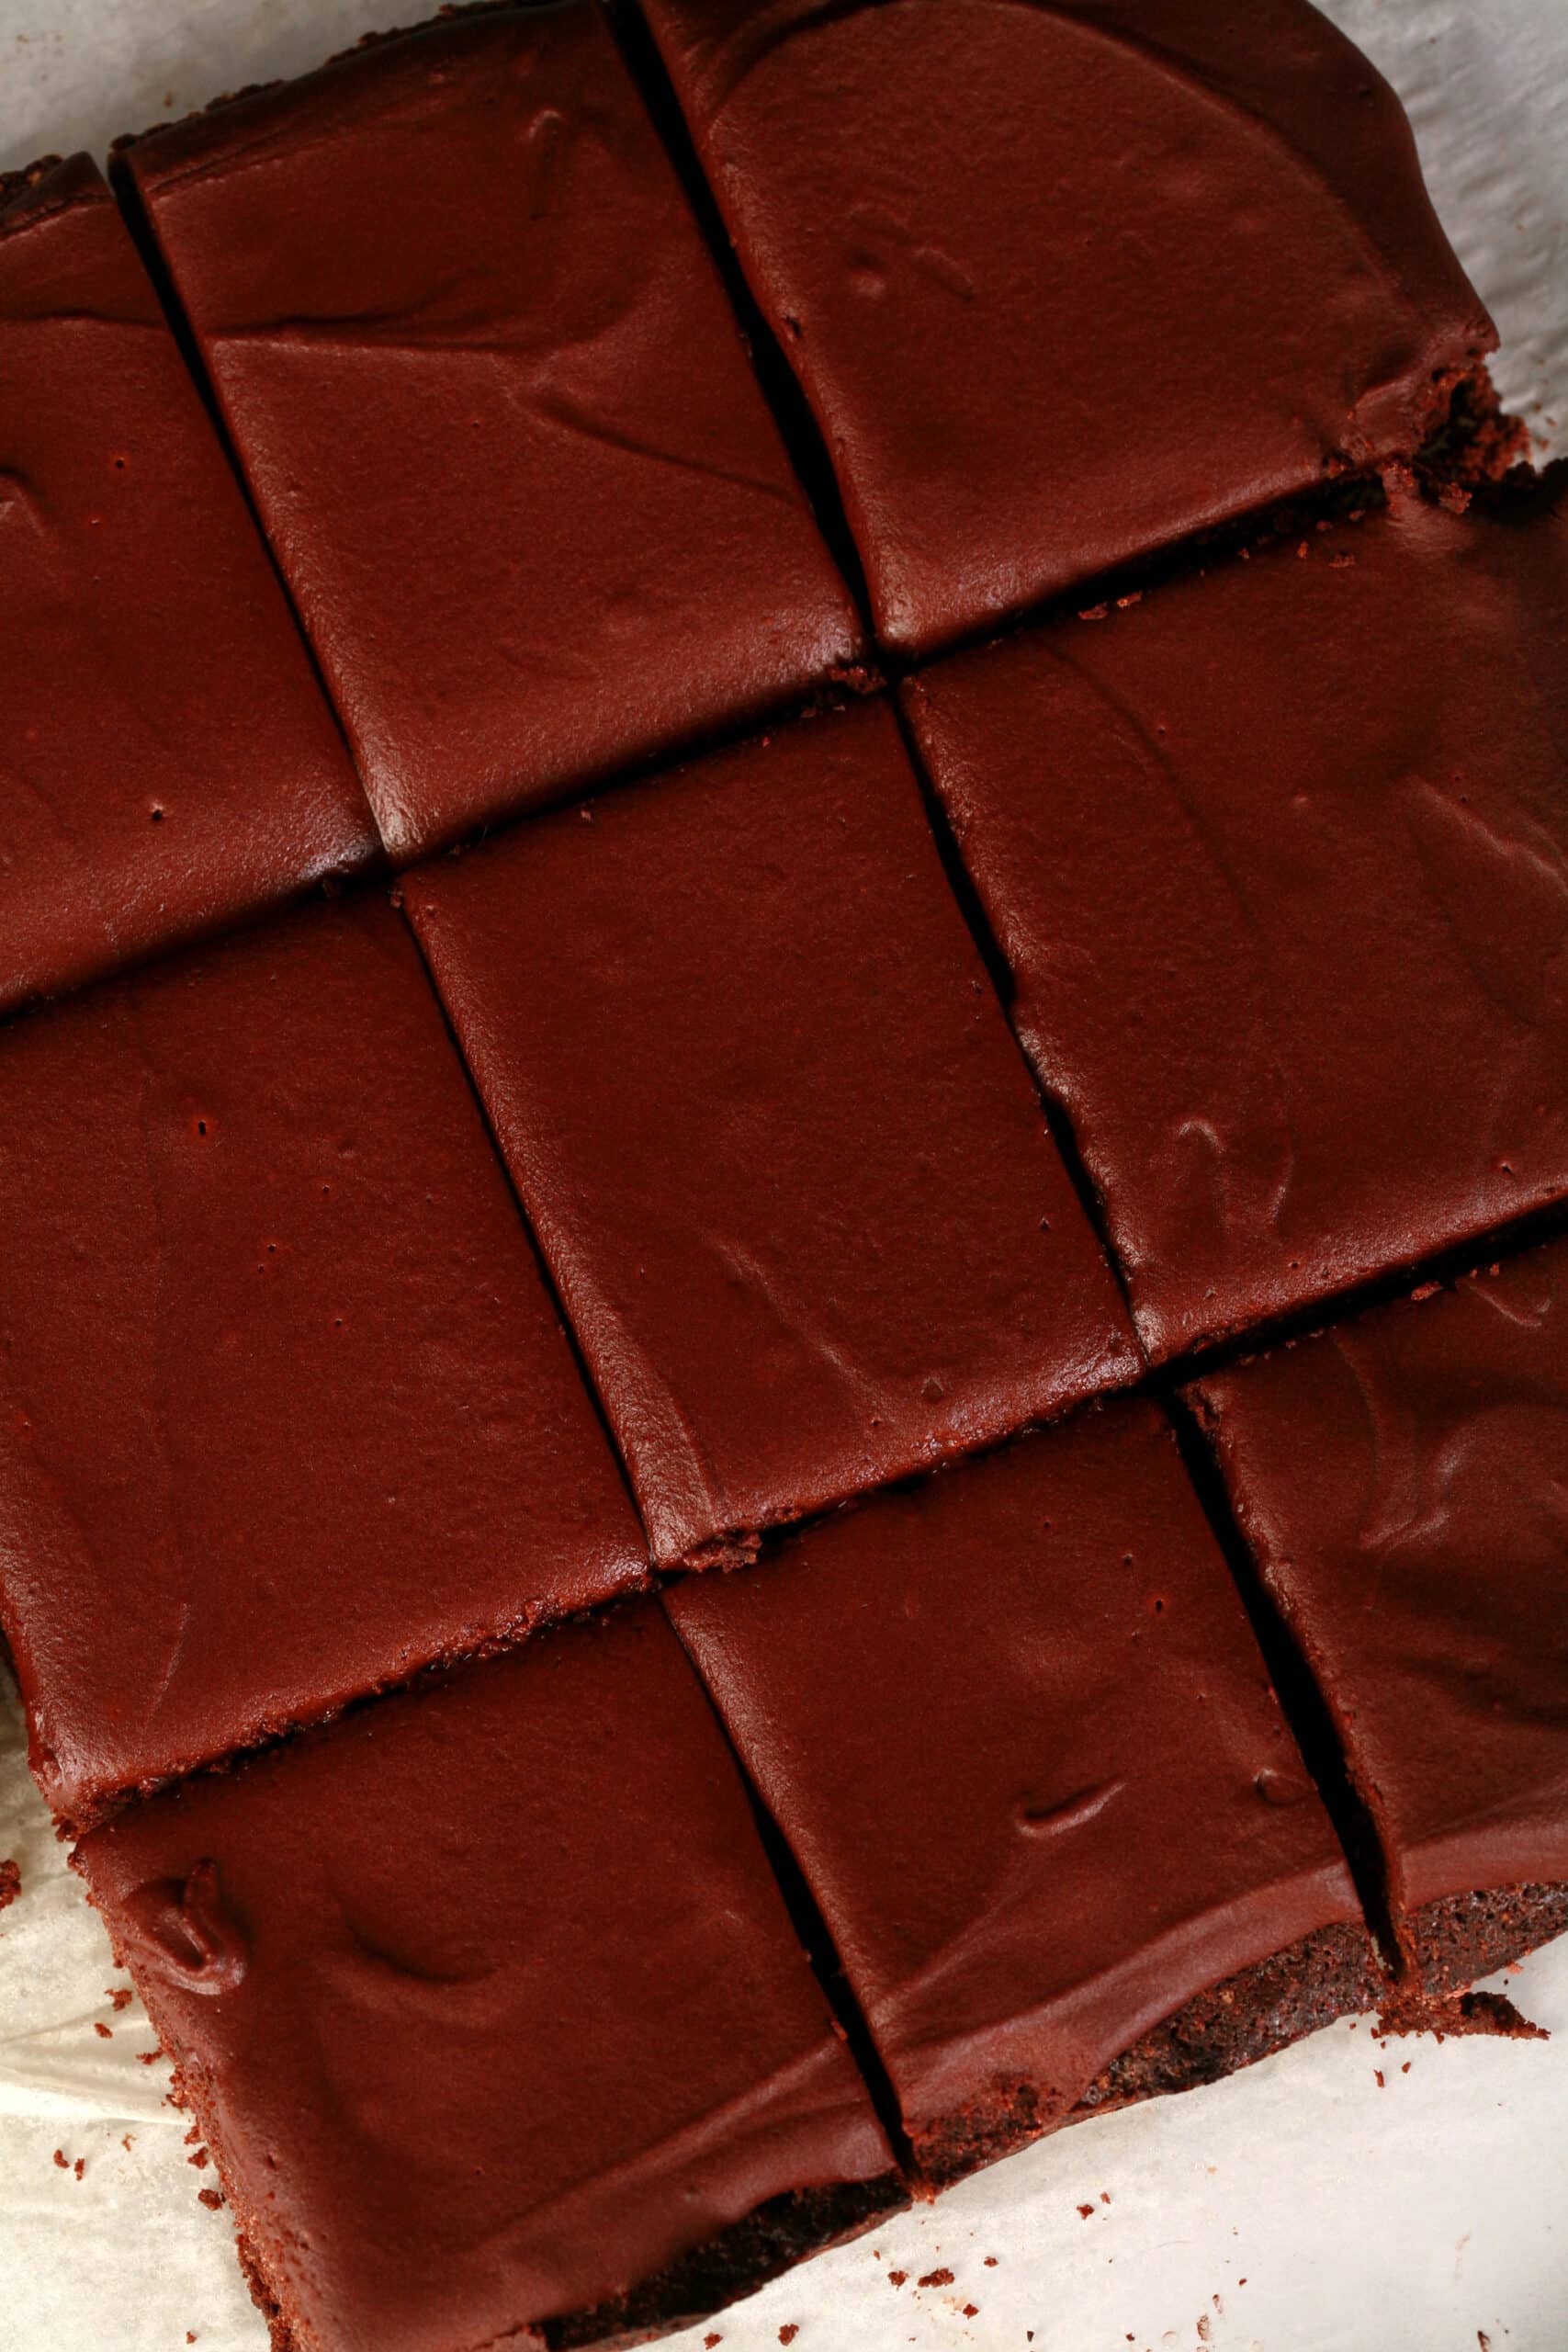 A slab of keto brownies, cut into bars.